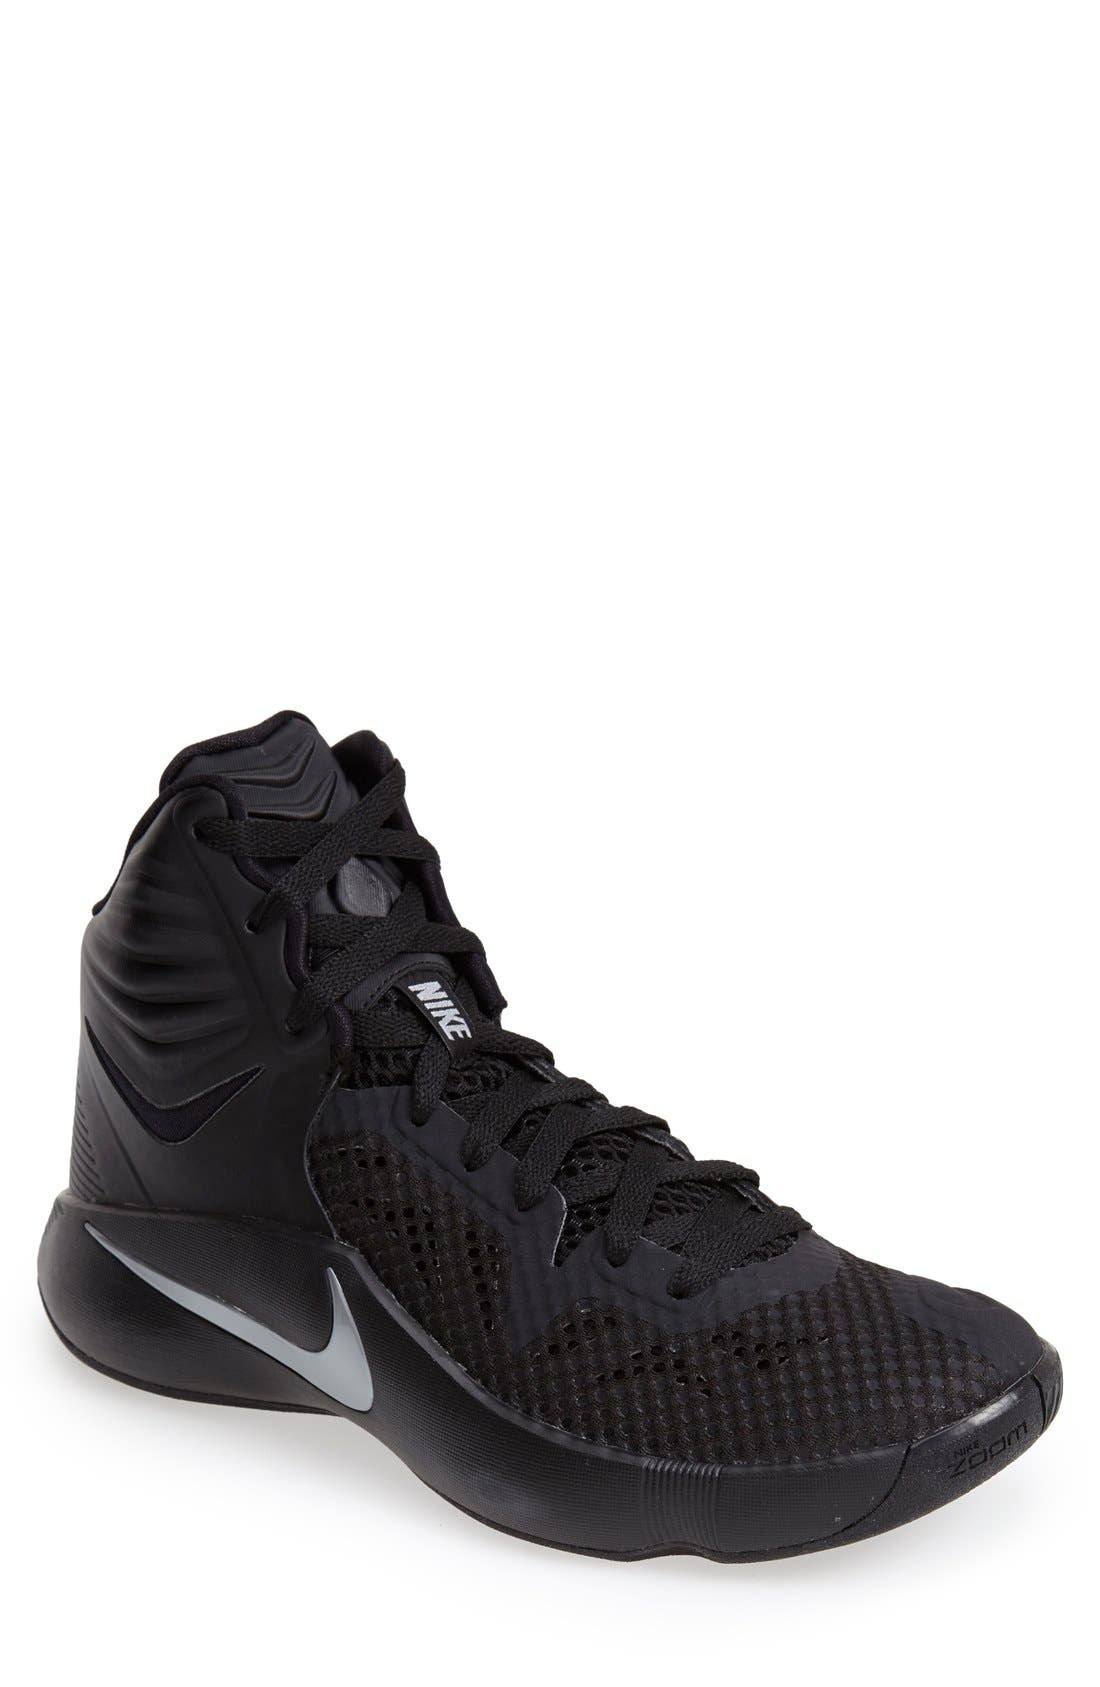 Nike 'Zoom HyperFuse 2014' Basketball 